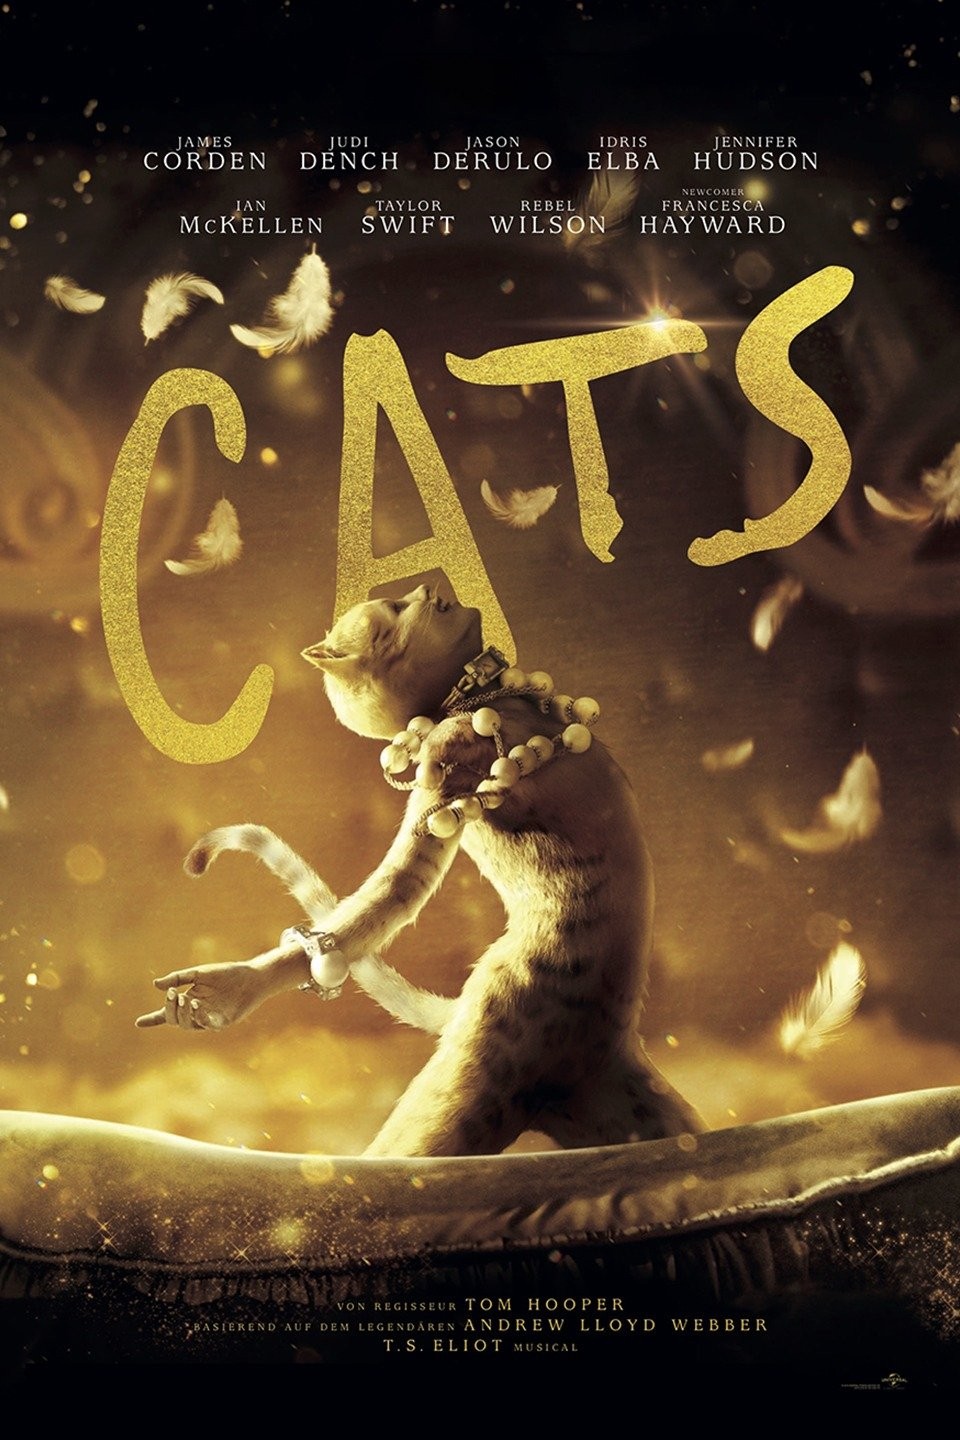 Grizabella - 2019 Movie, 'Cats' Musical Wiki